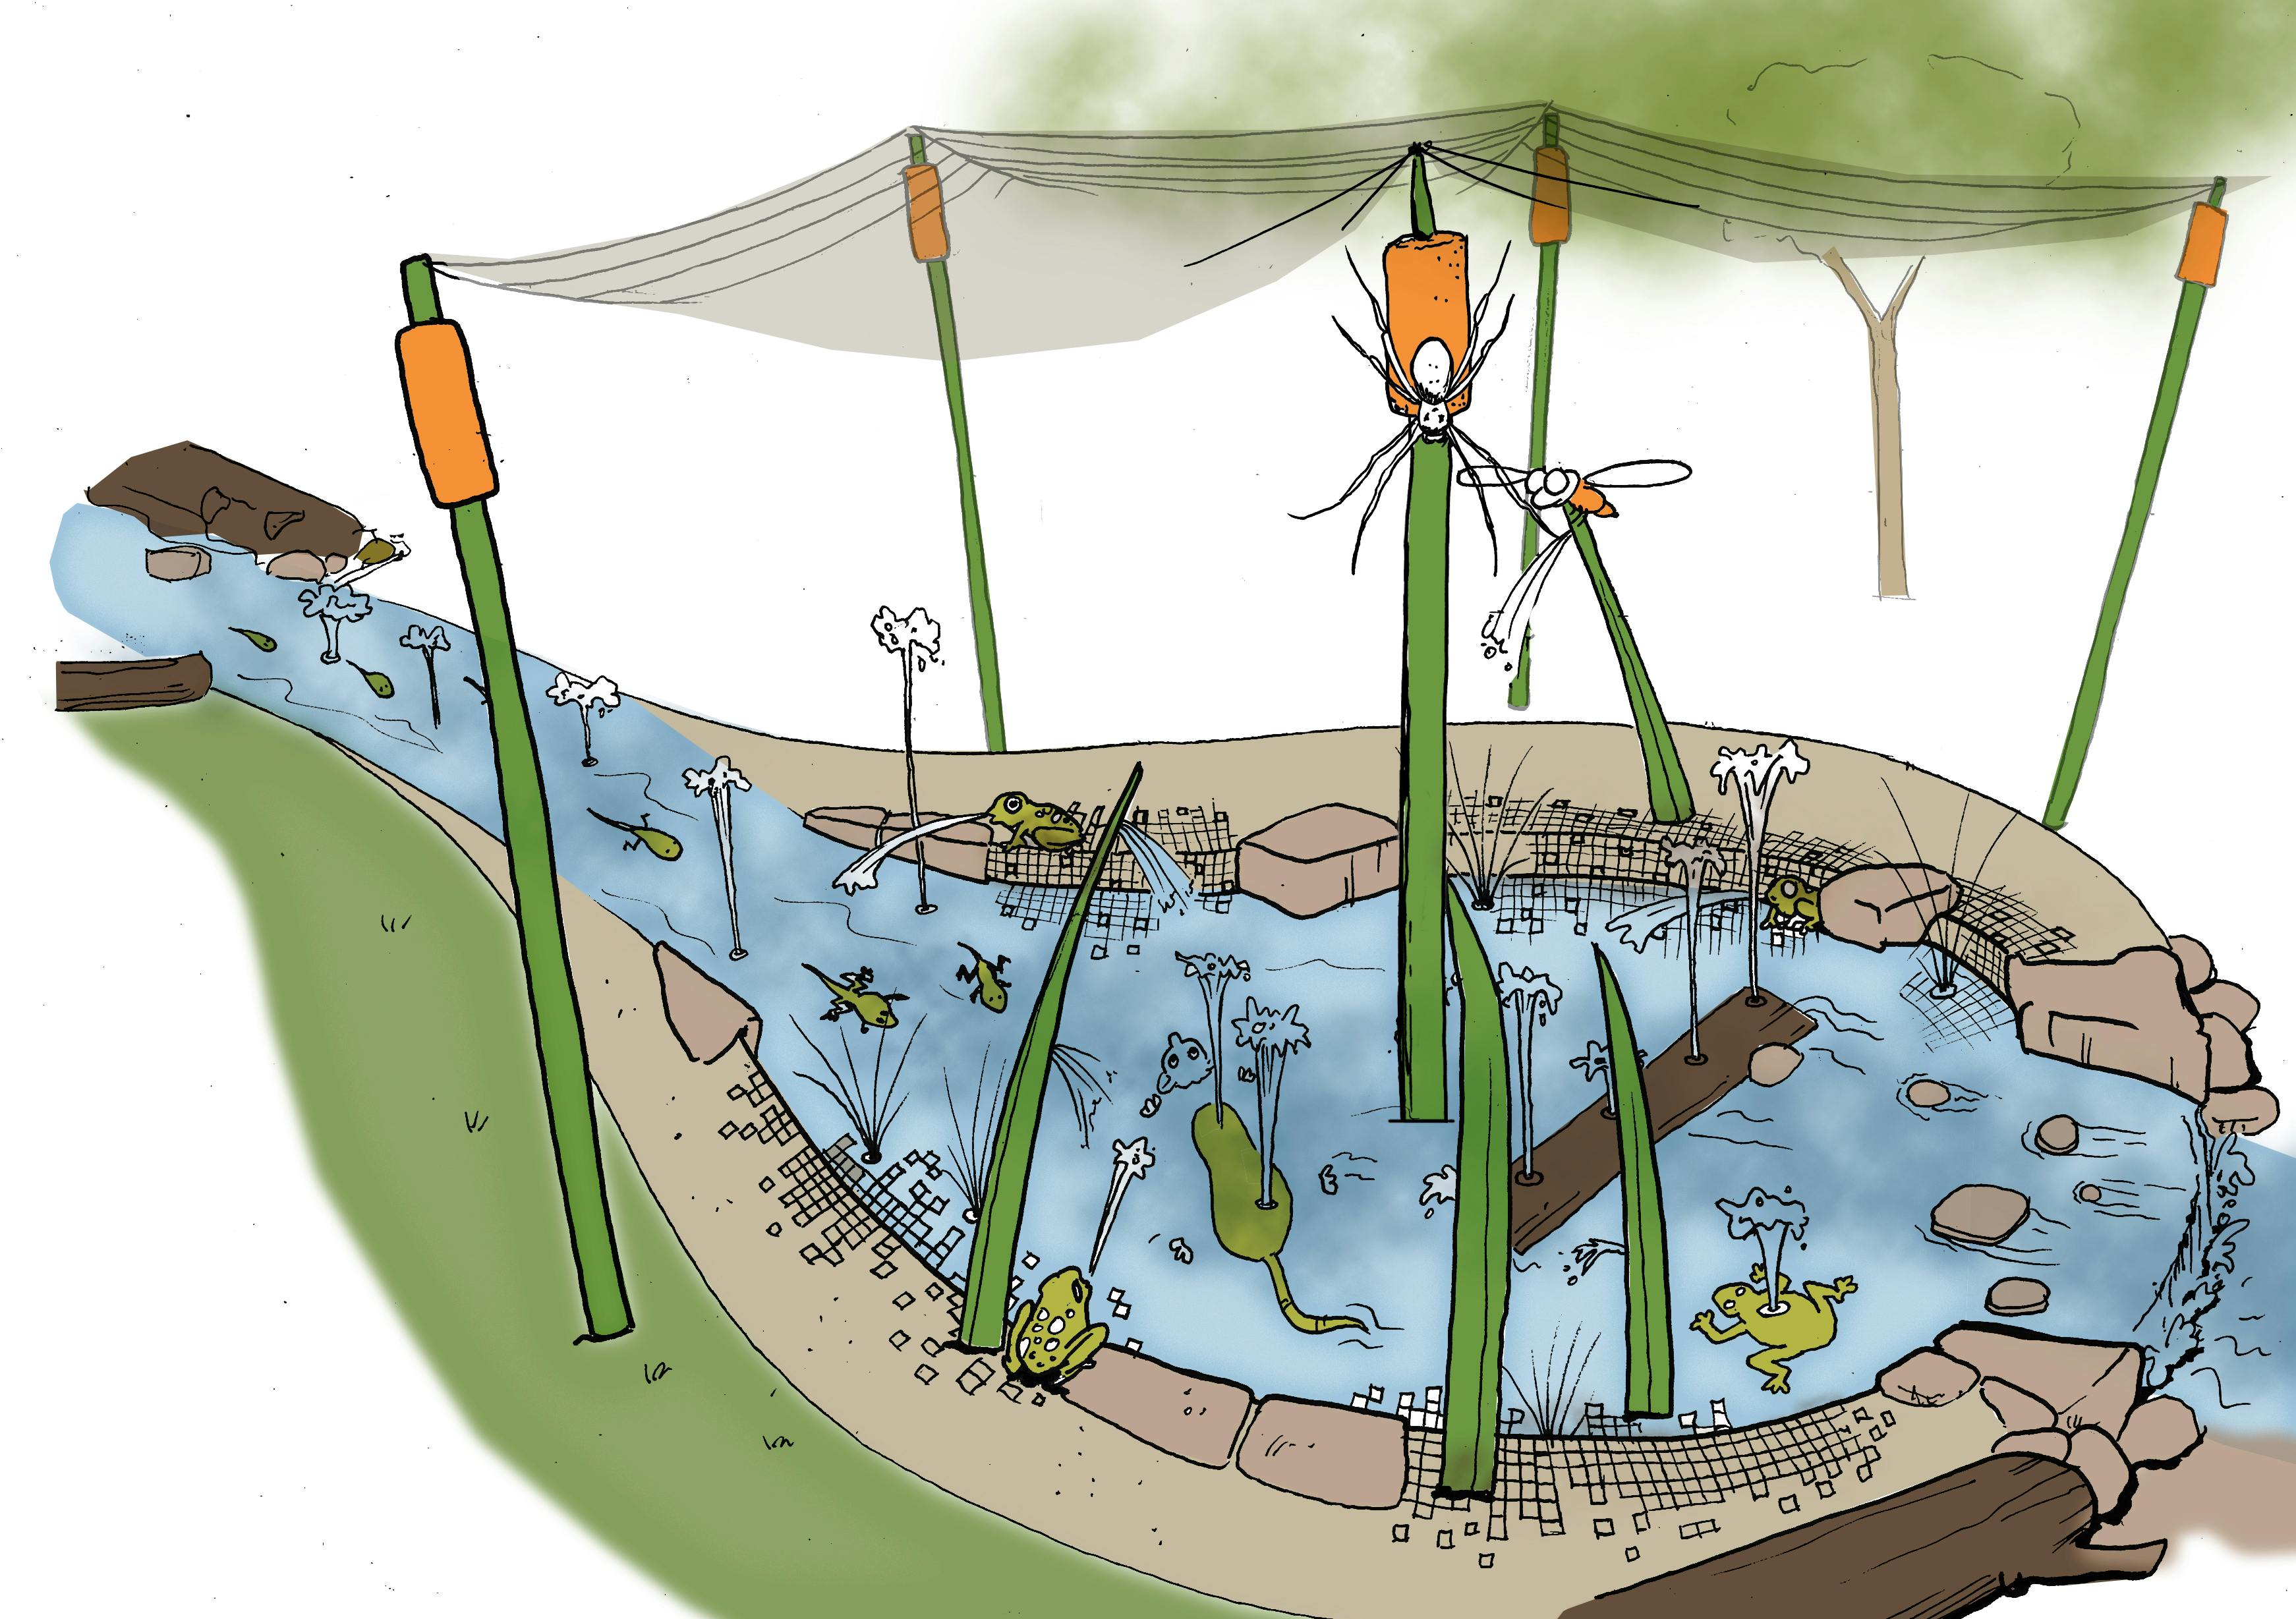 Wading Pool illustration